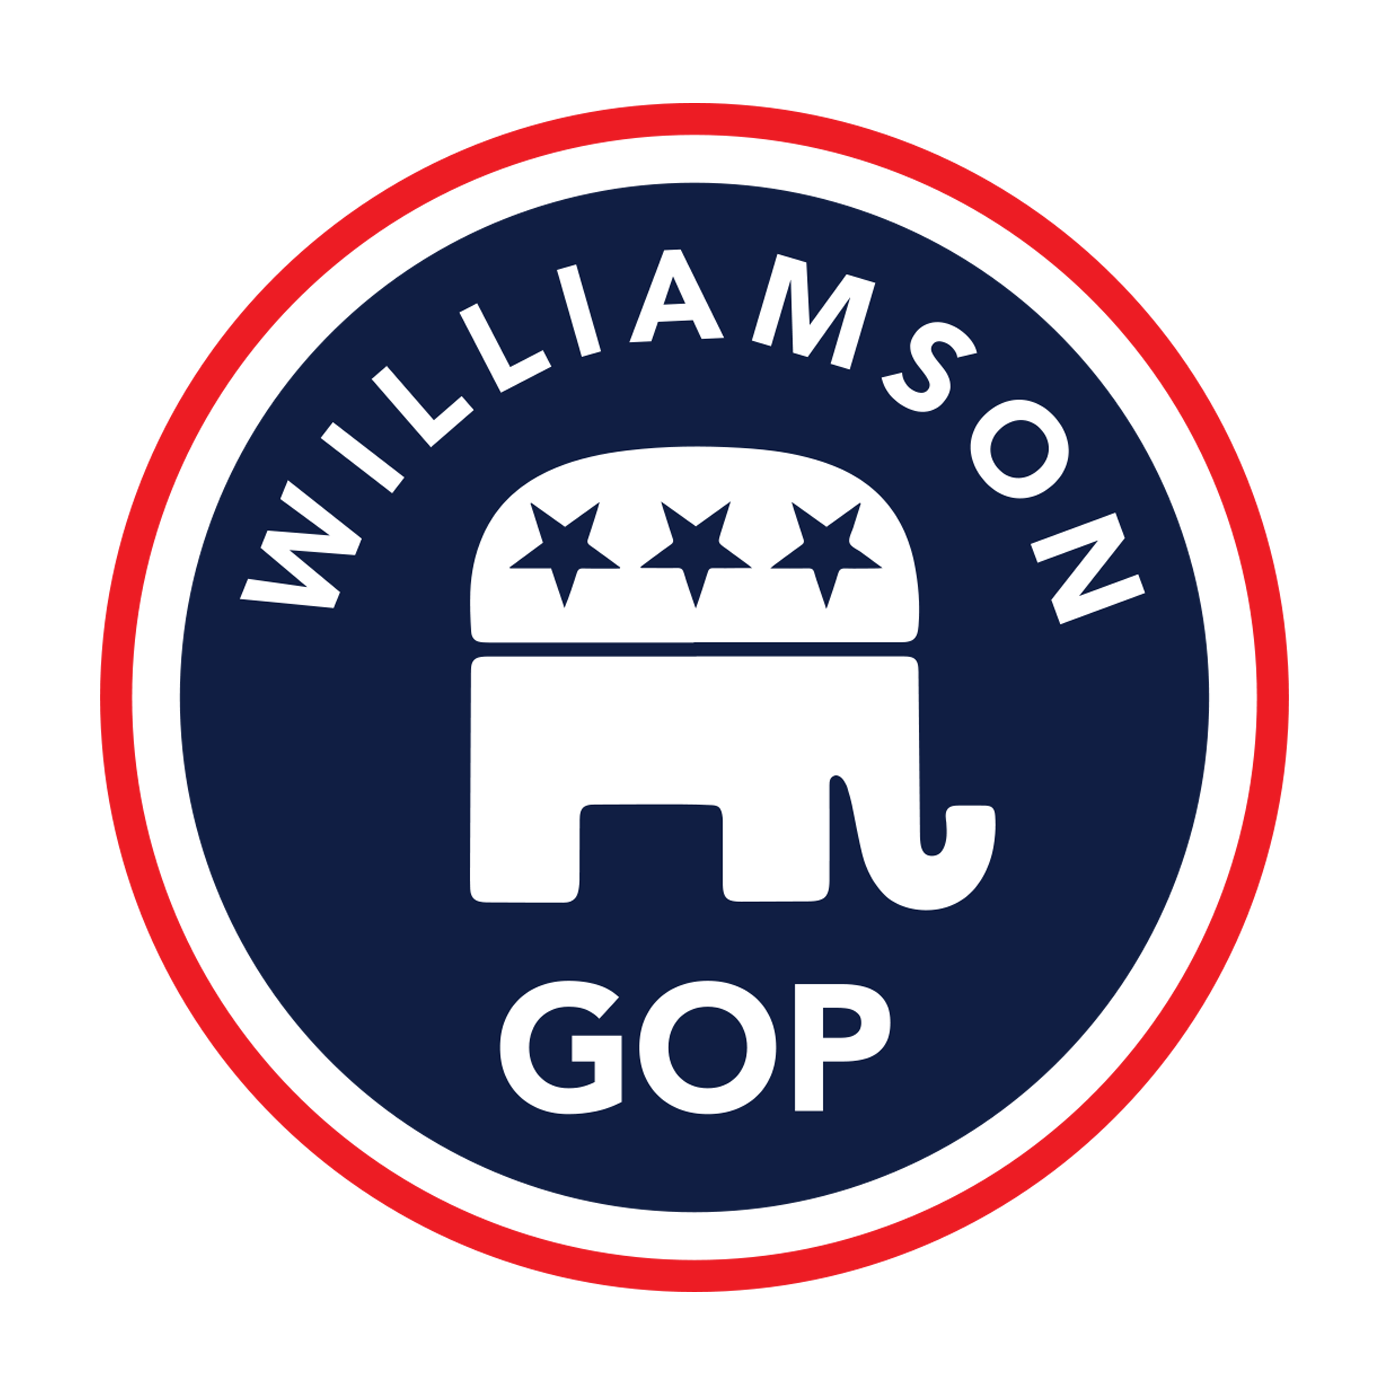 Williamson County Republican Party logo